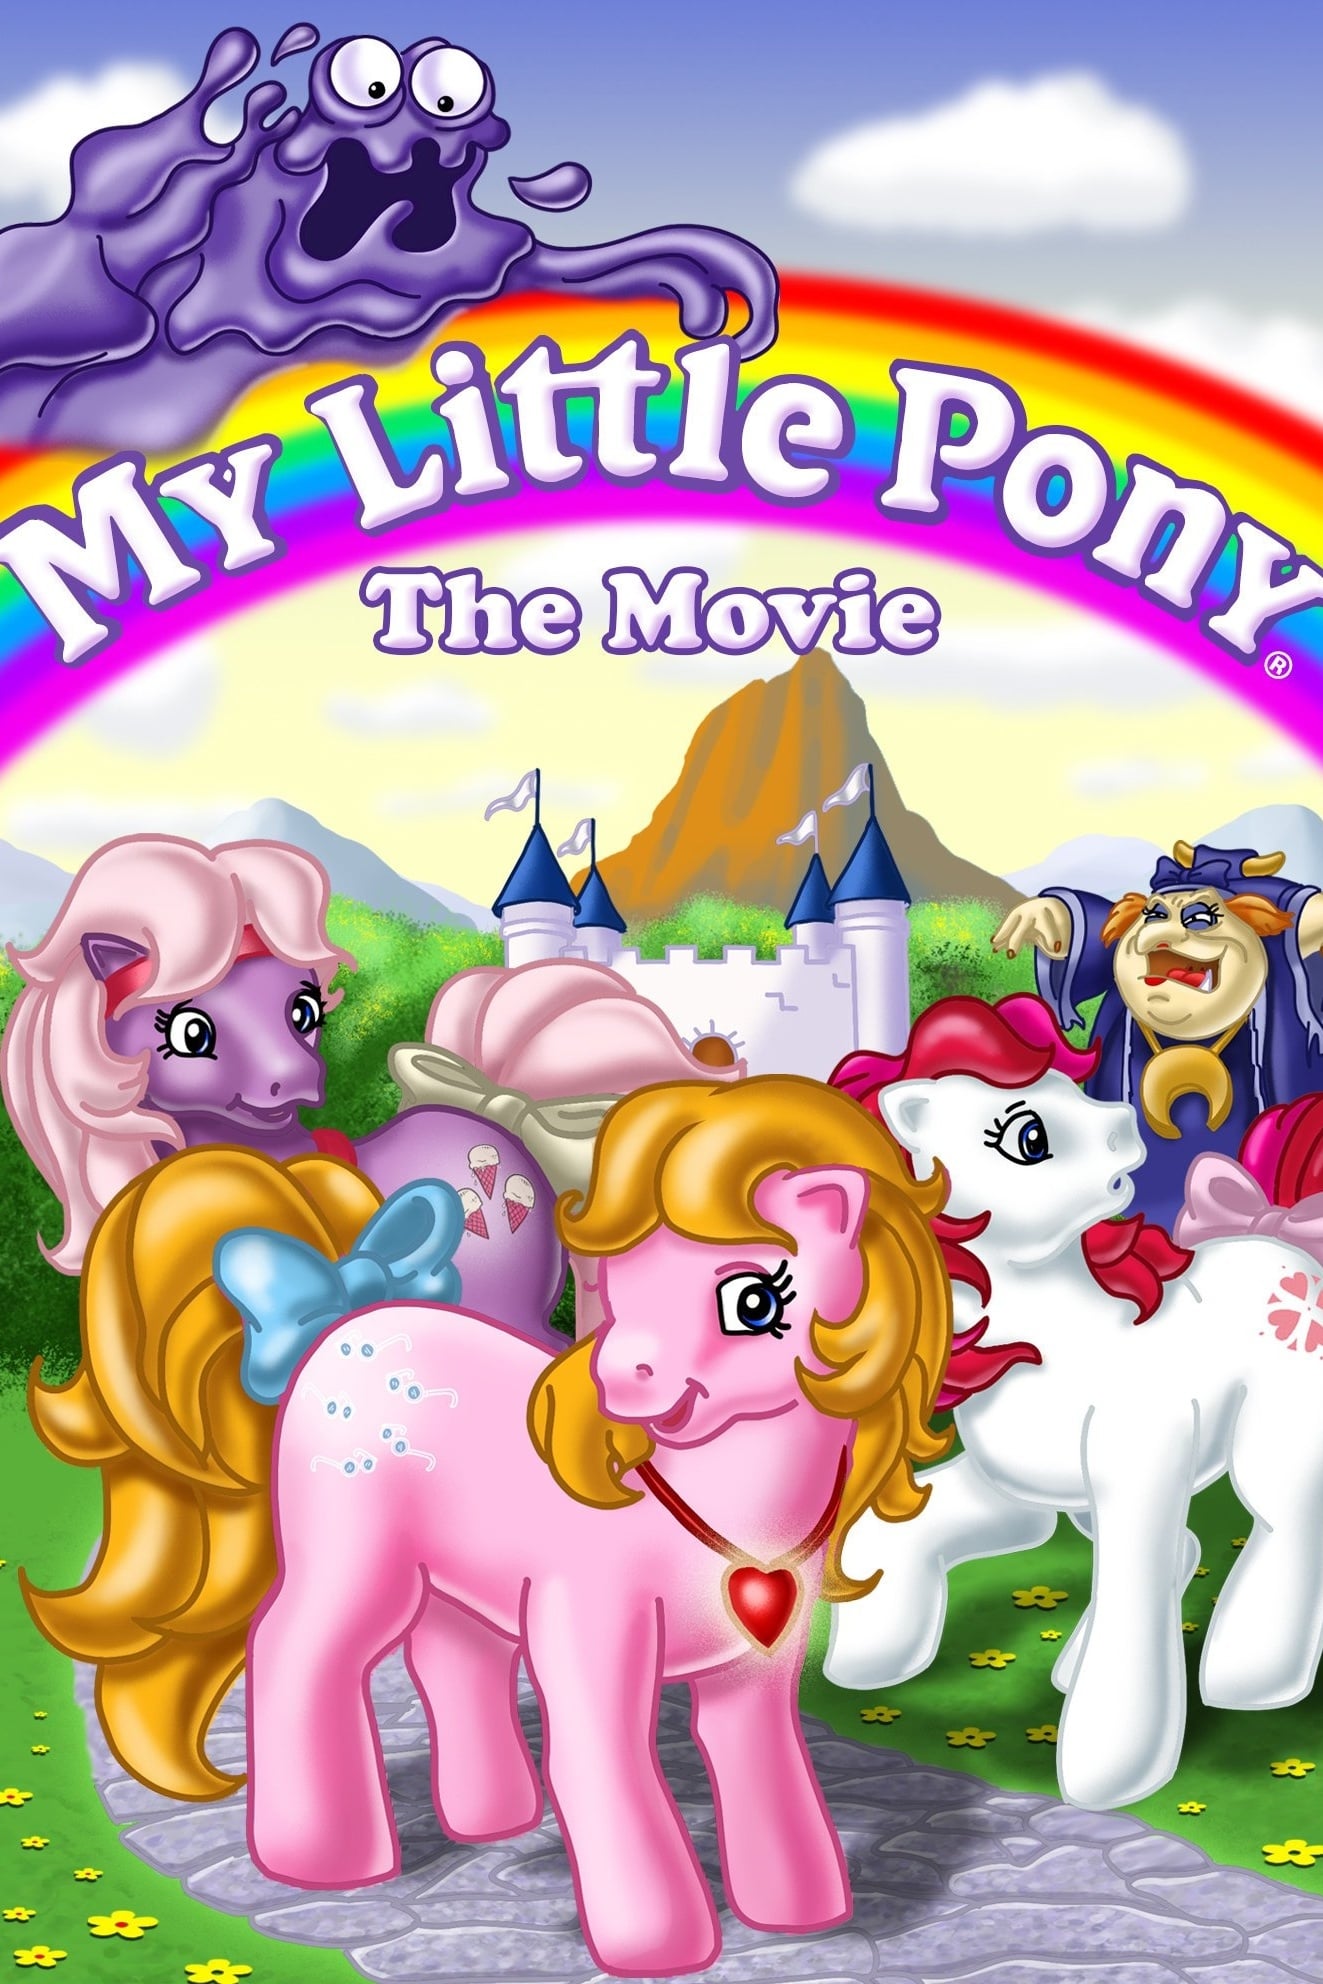 My Little Pony: The Movie (1986)